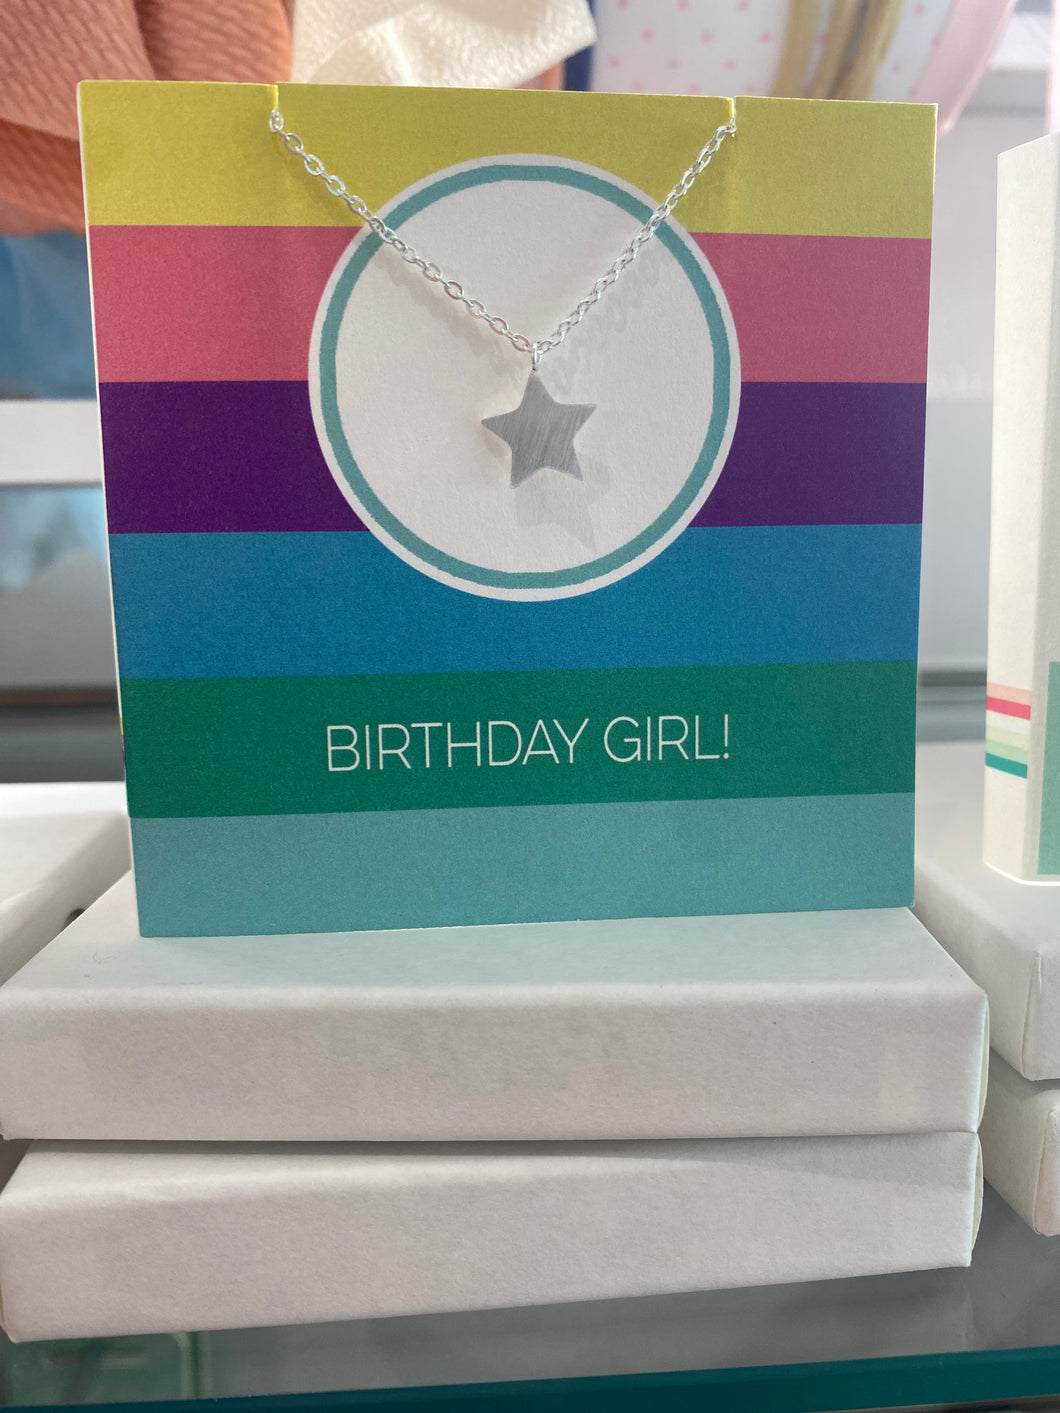 Birthday Girl on a greetings card